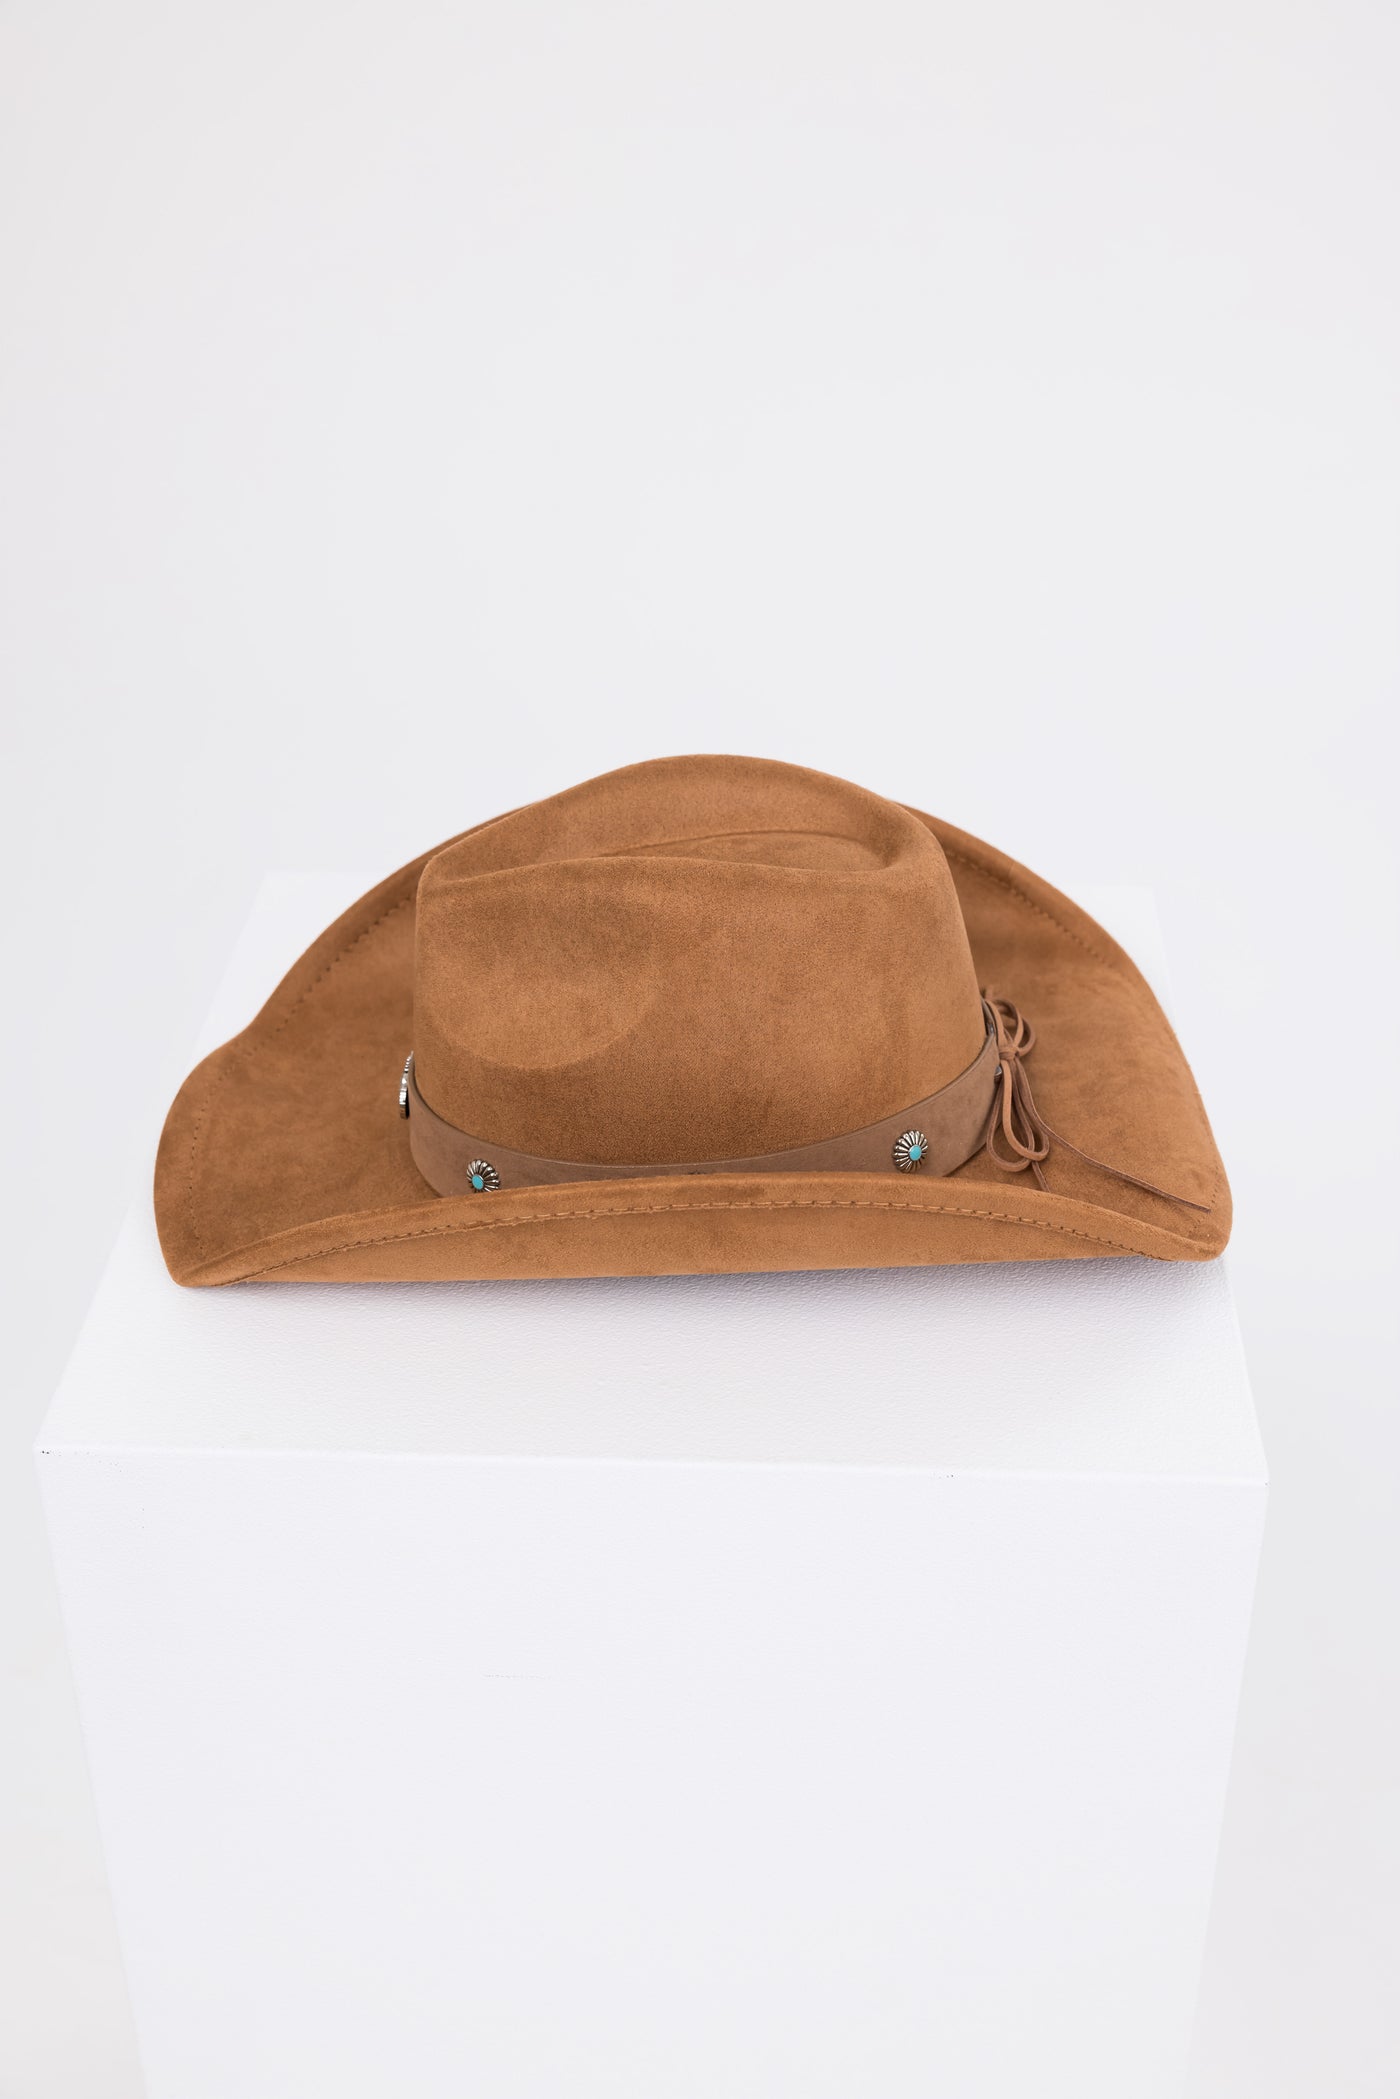 Cognac Suede Western Style Curved Brim Hat